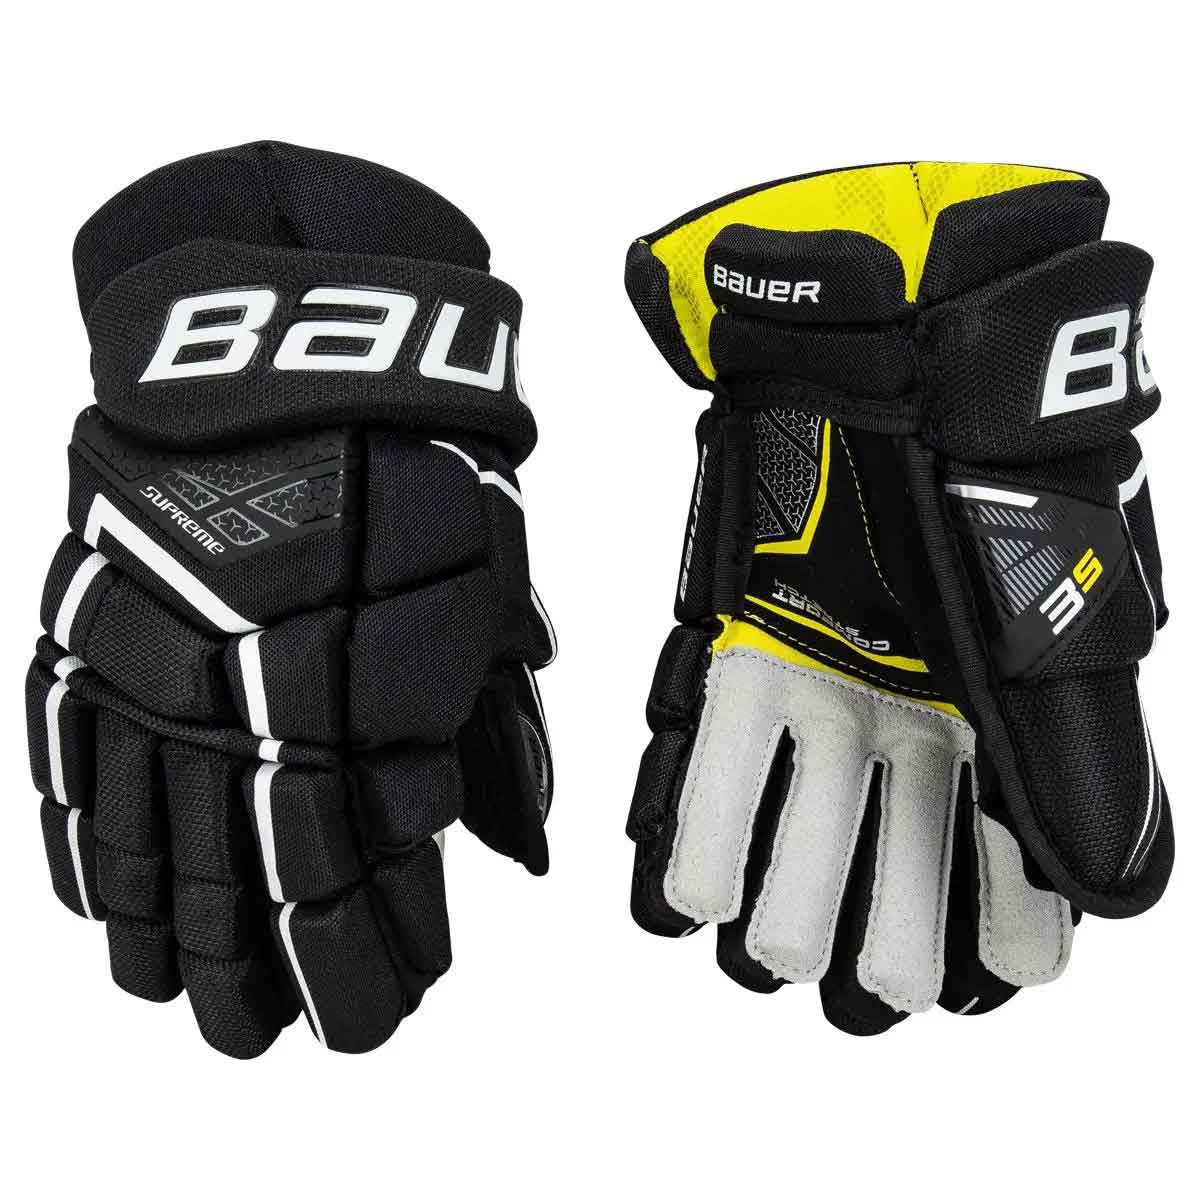 Bauer S21 Supreme 3S Ice Hockey Gloves (Intermediate) full view